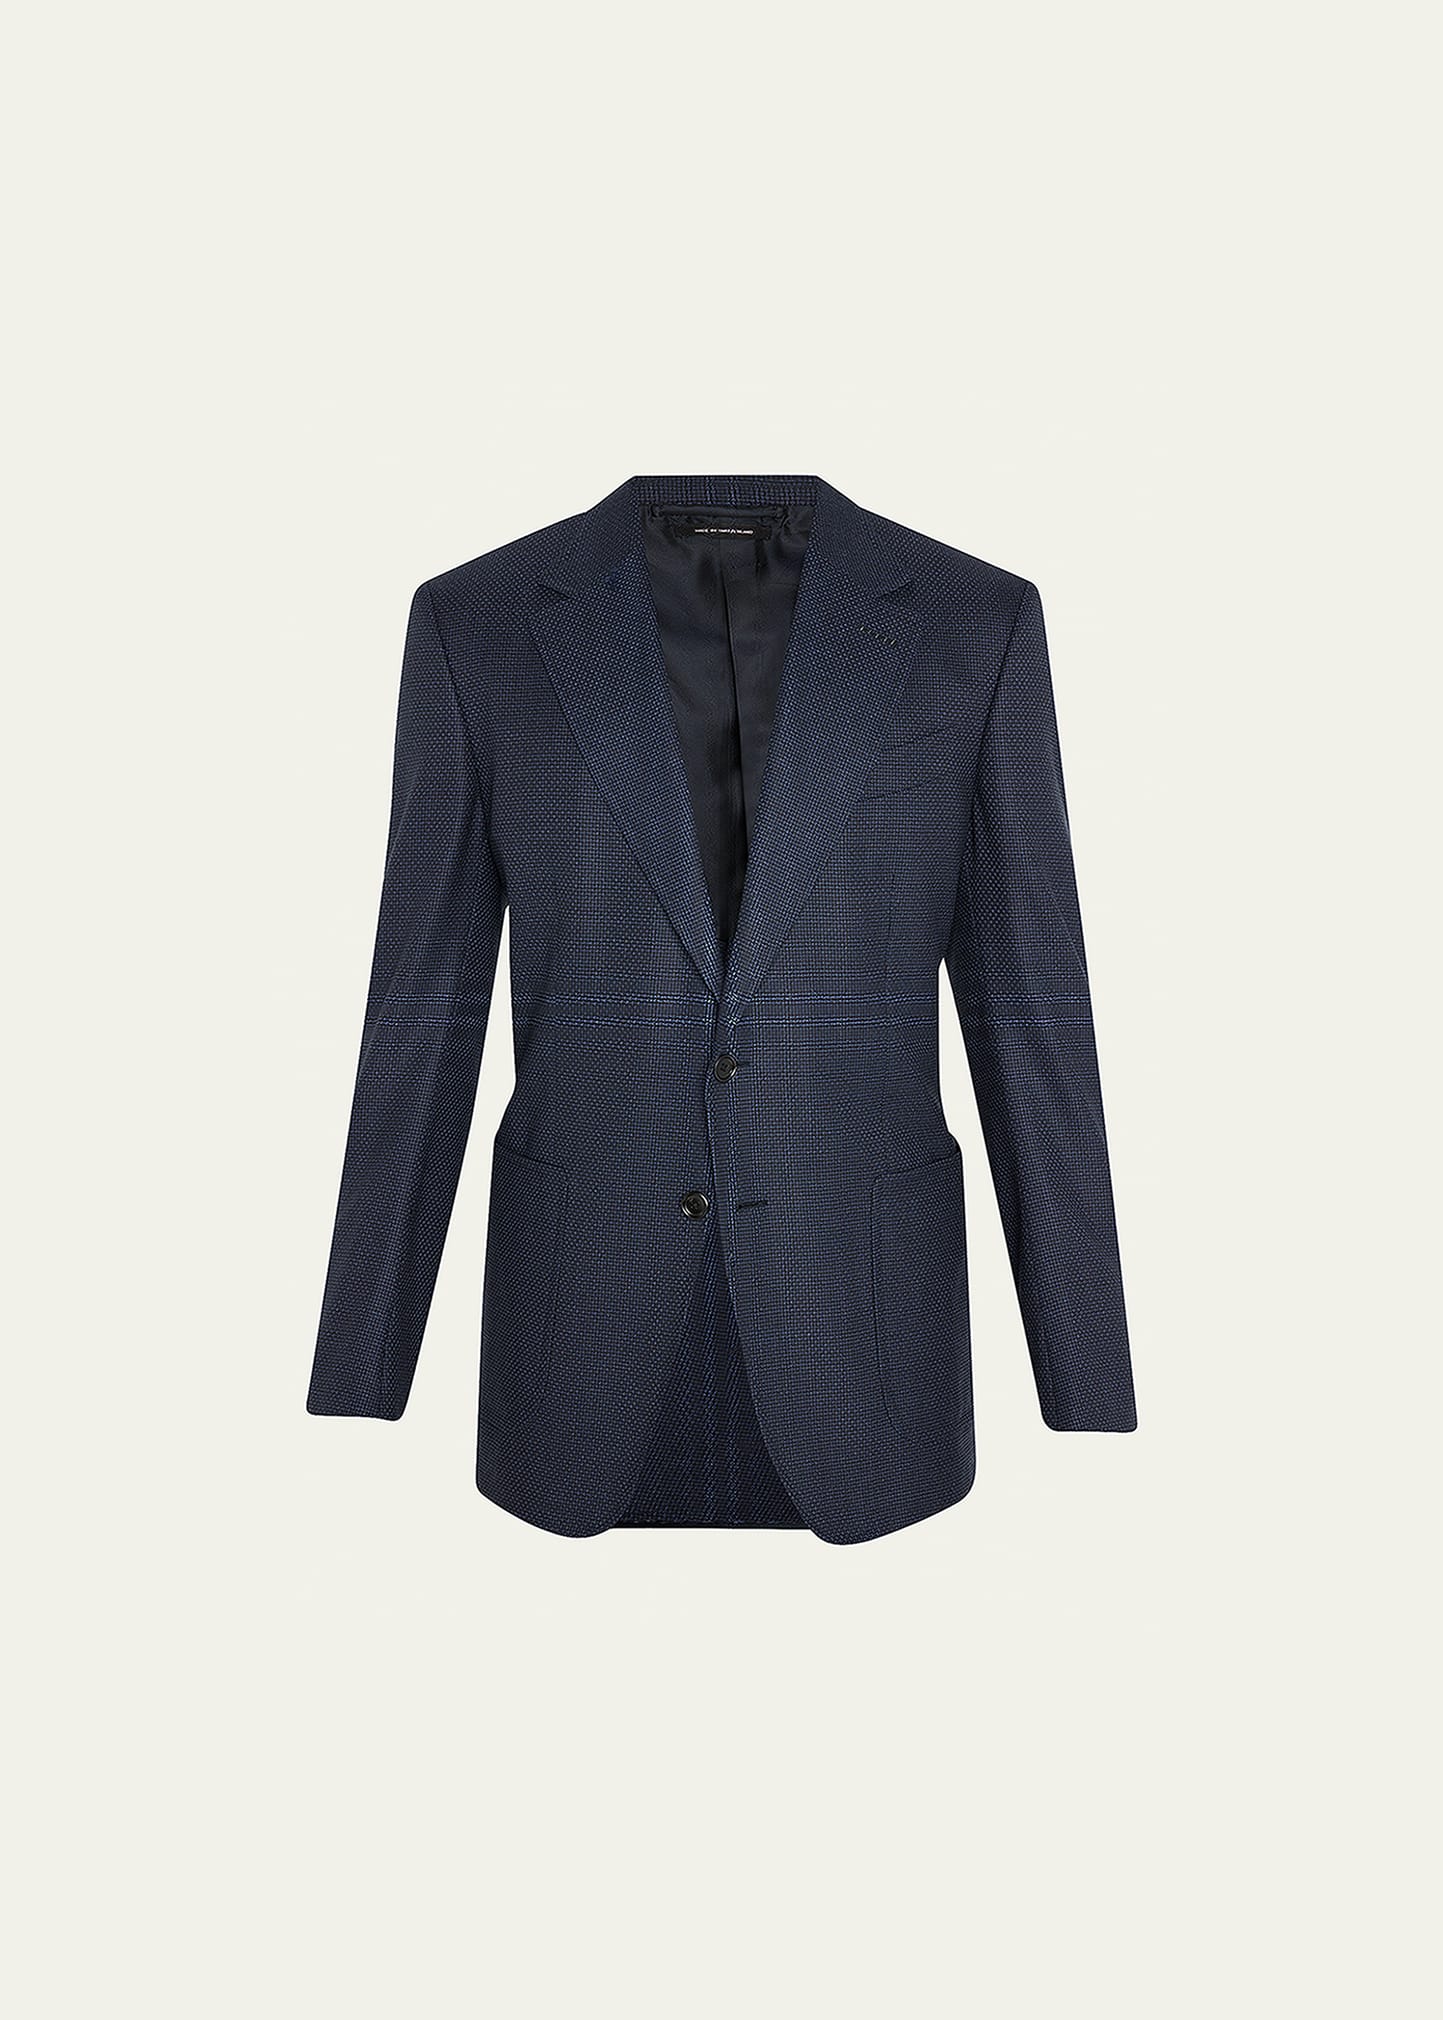 Tom Ford Men's Shelton Mouline Micro-weave Sport Jacket In Blue Navy Check